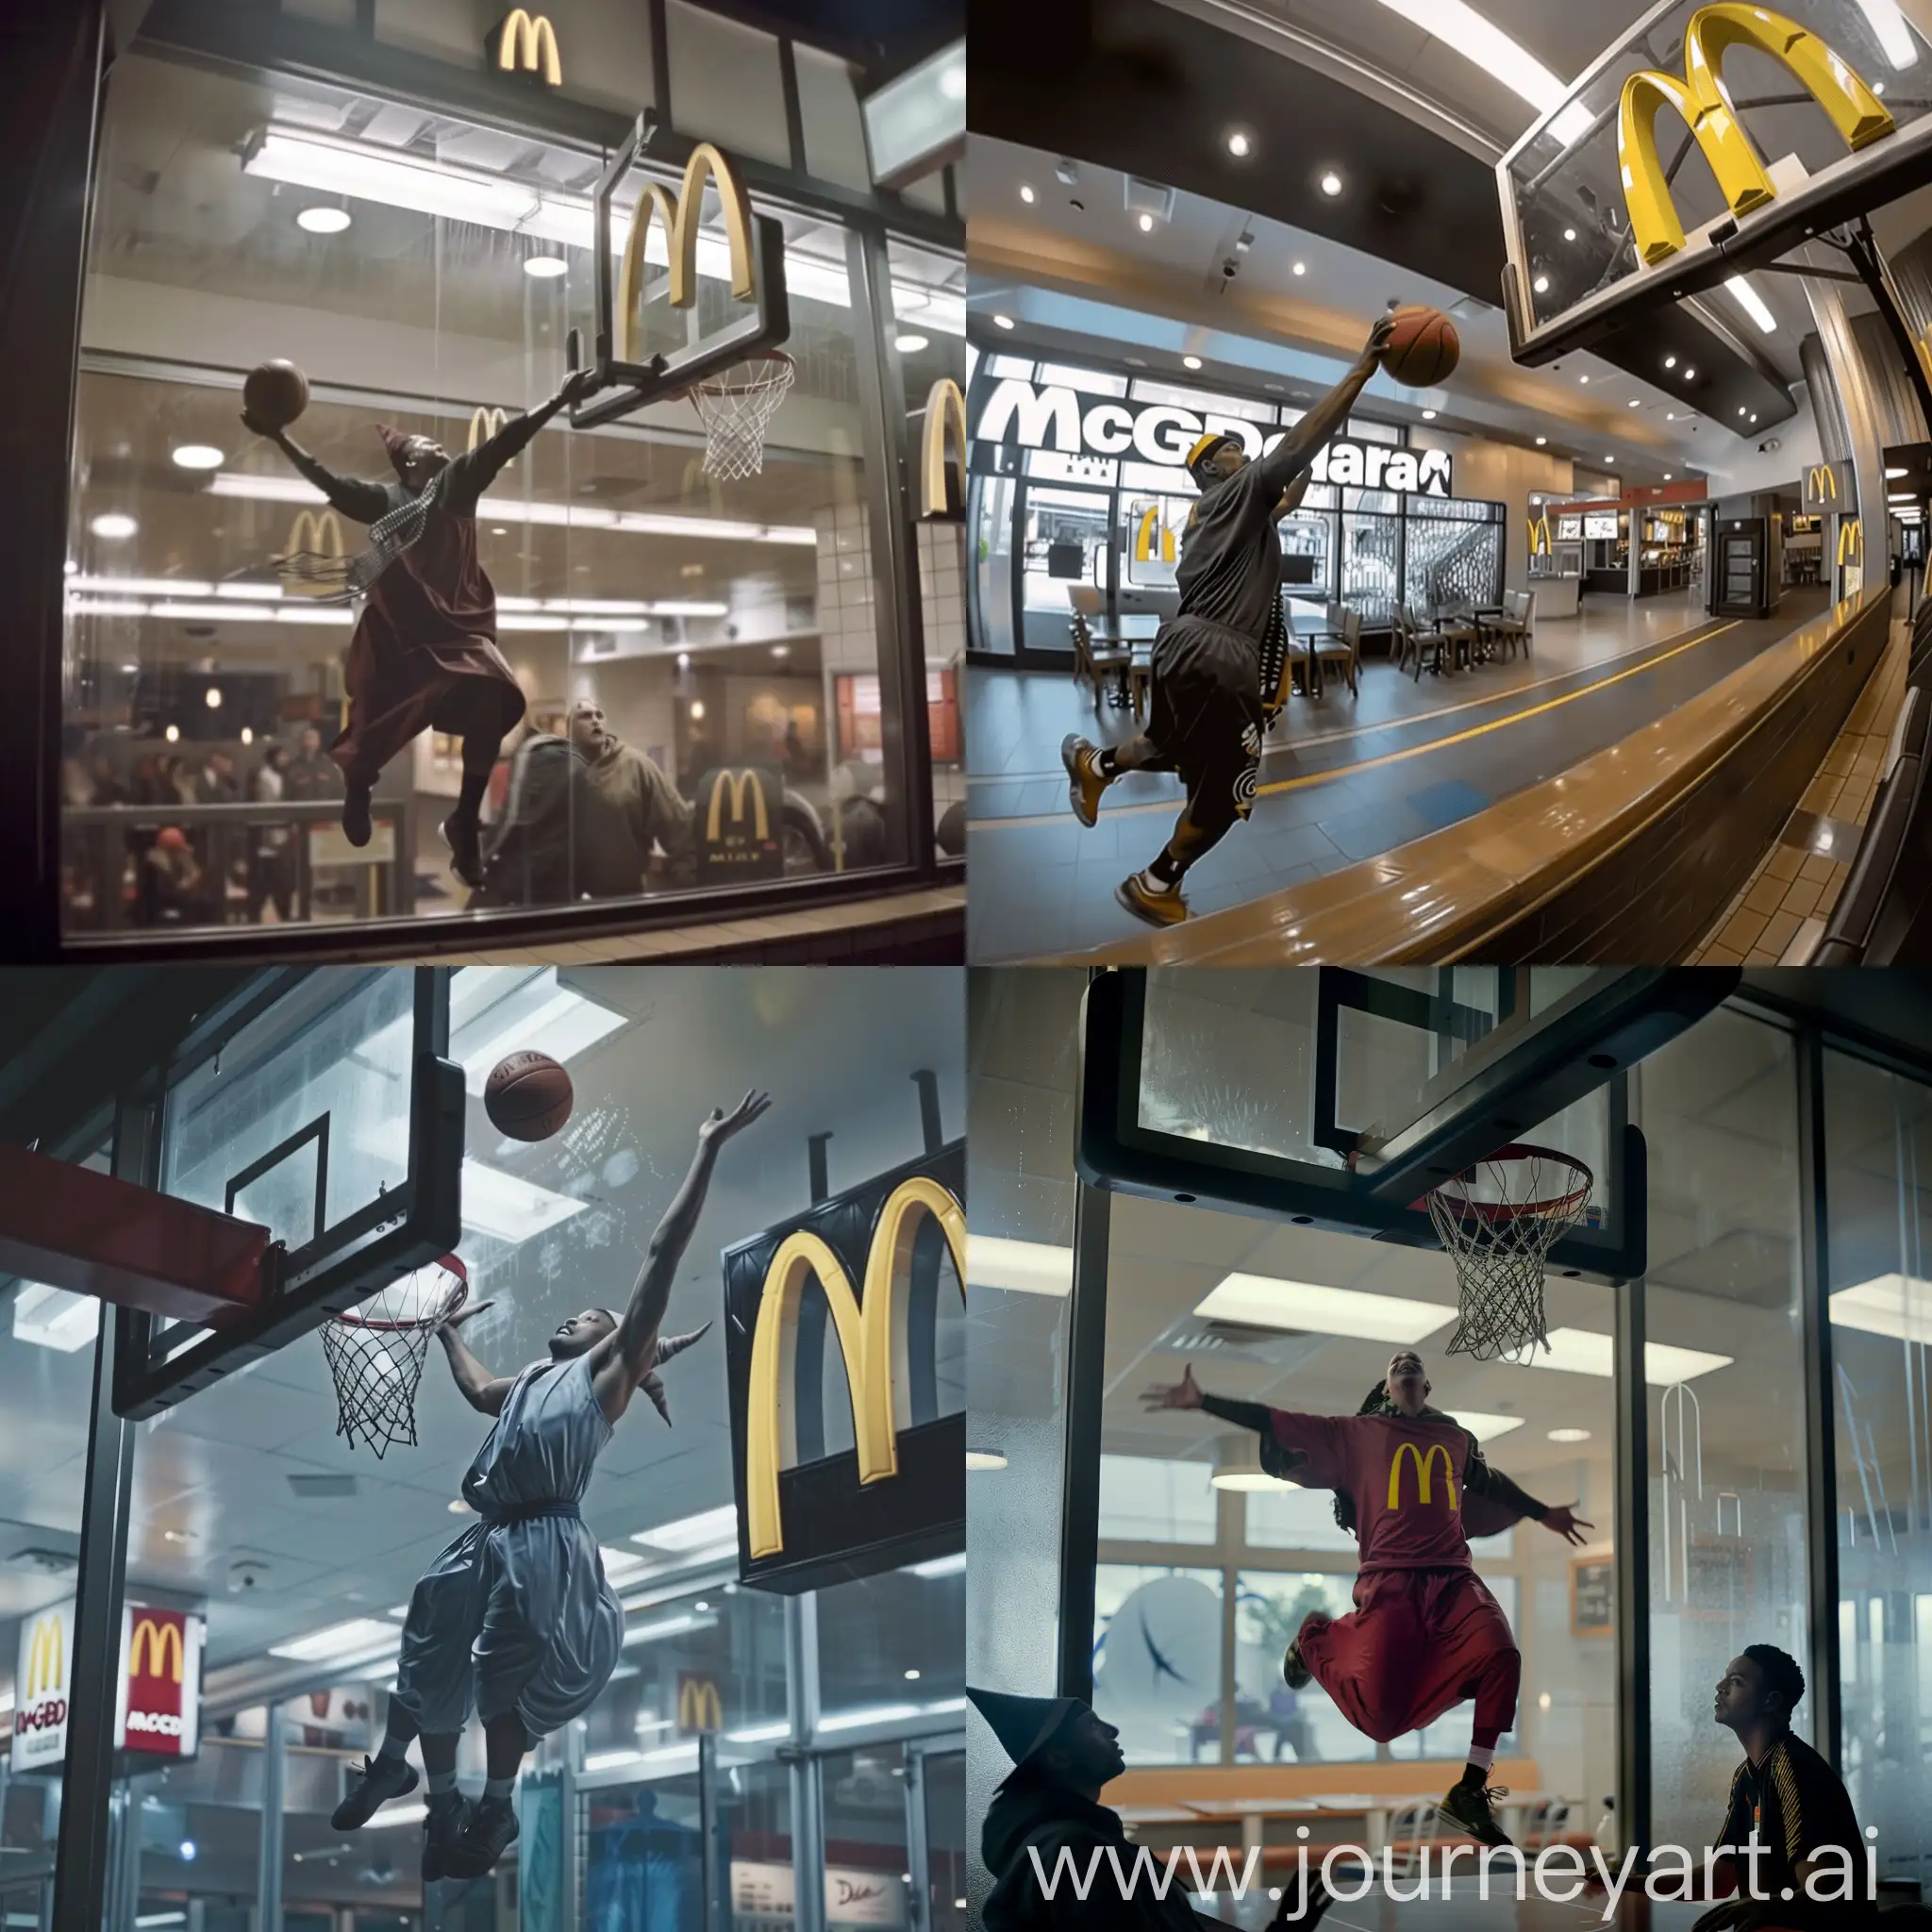 Wizard-Playing-Basketball-in-McDonalds-Restaurant